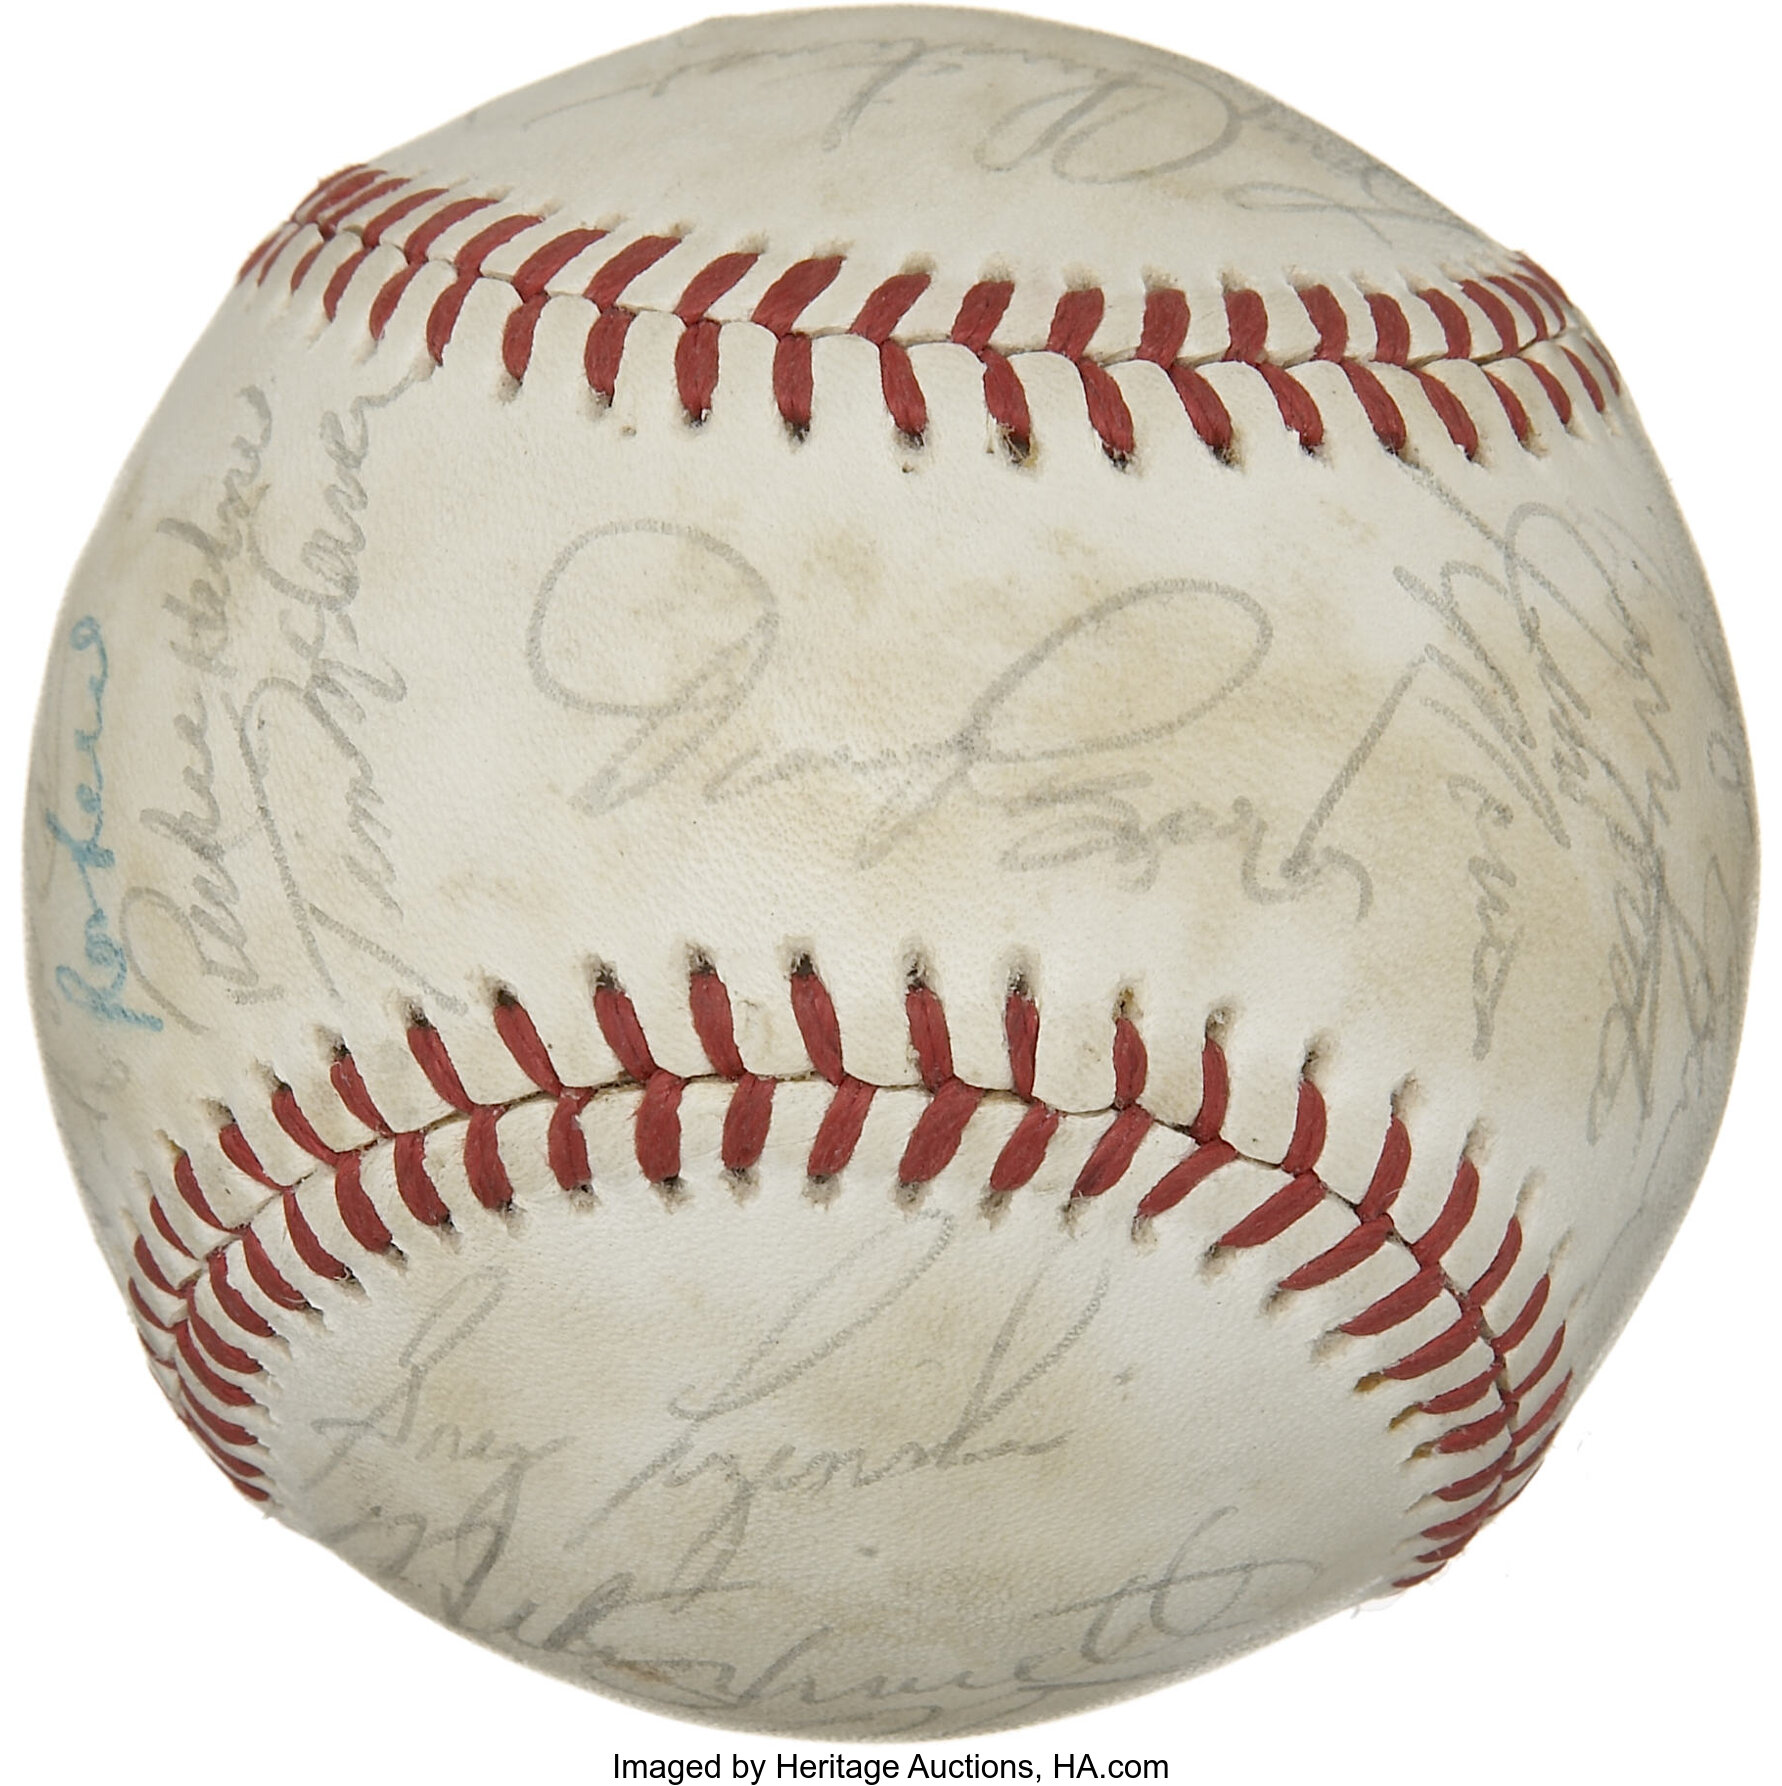 Greg Luzinski Autographed Signed Framed Philadelphia Phillies